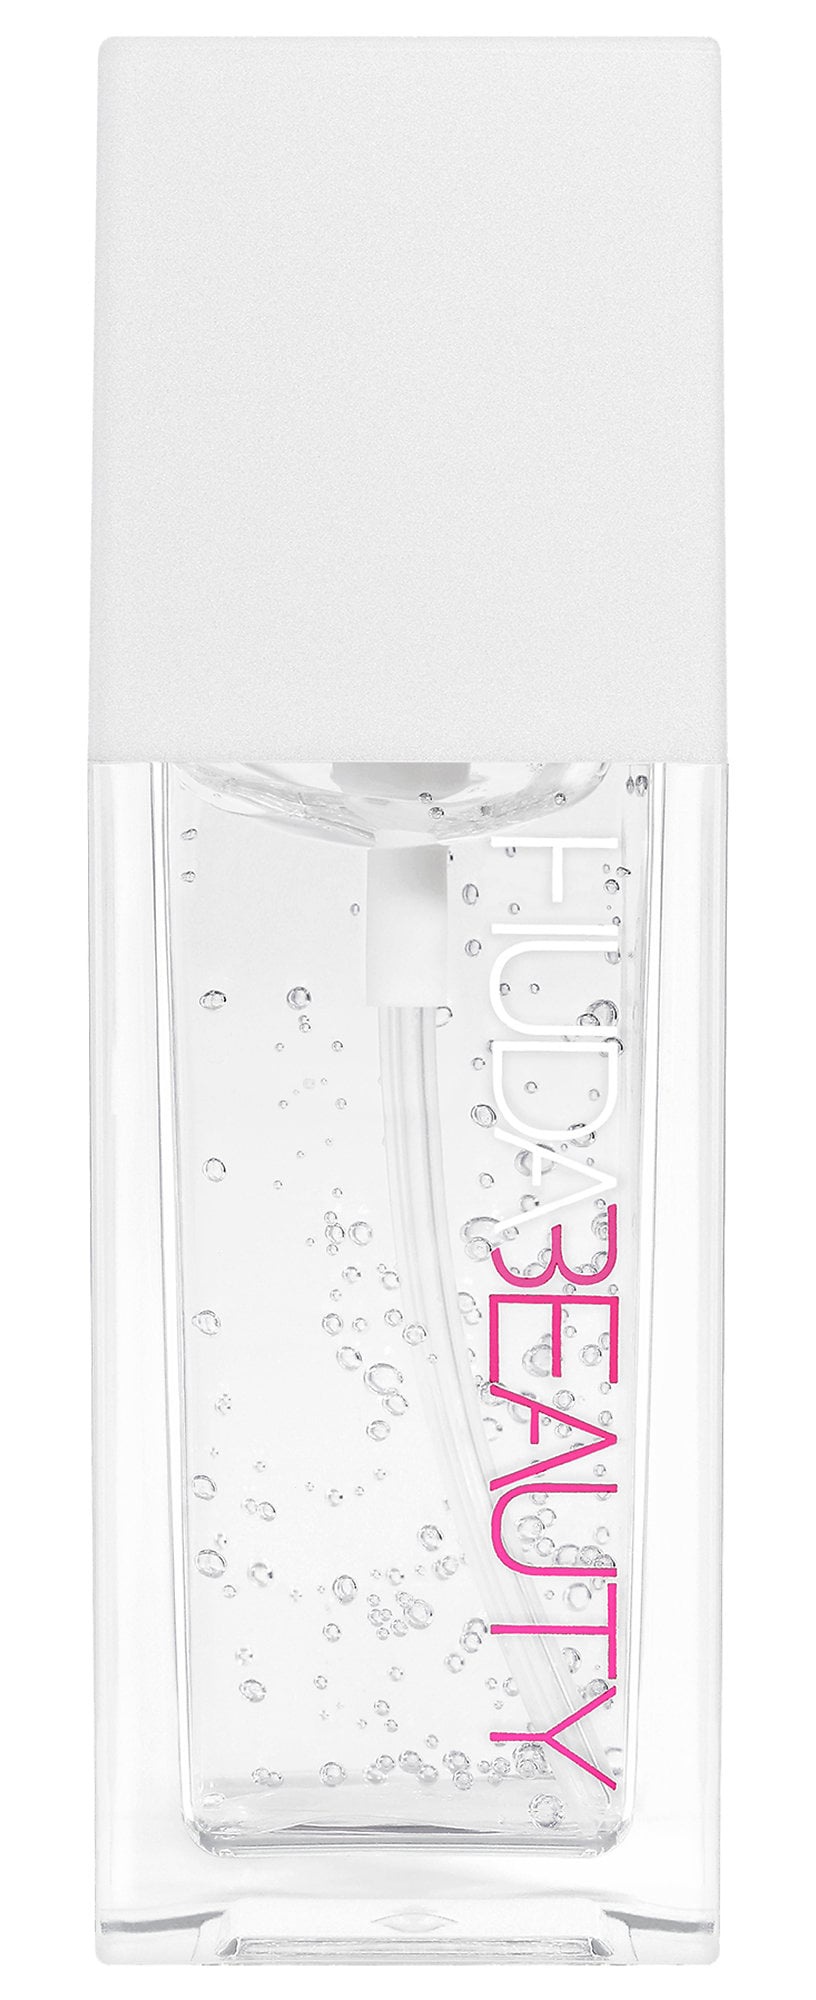 Huda Beauty Water Jelly Hydrating Face Primer